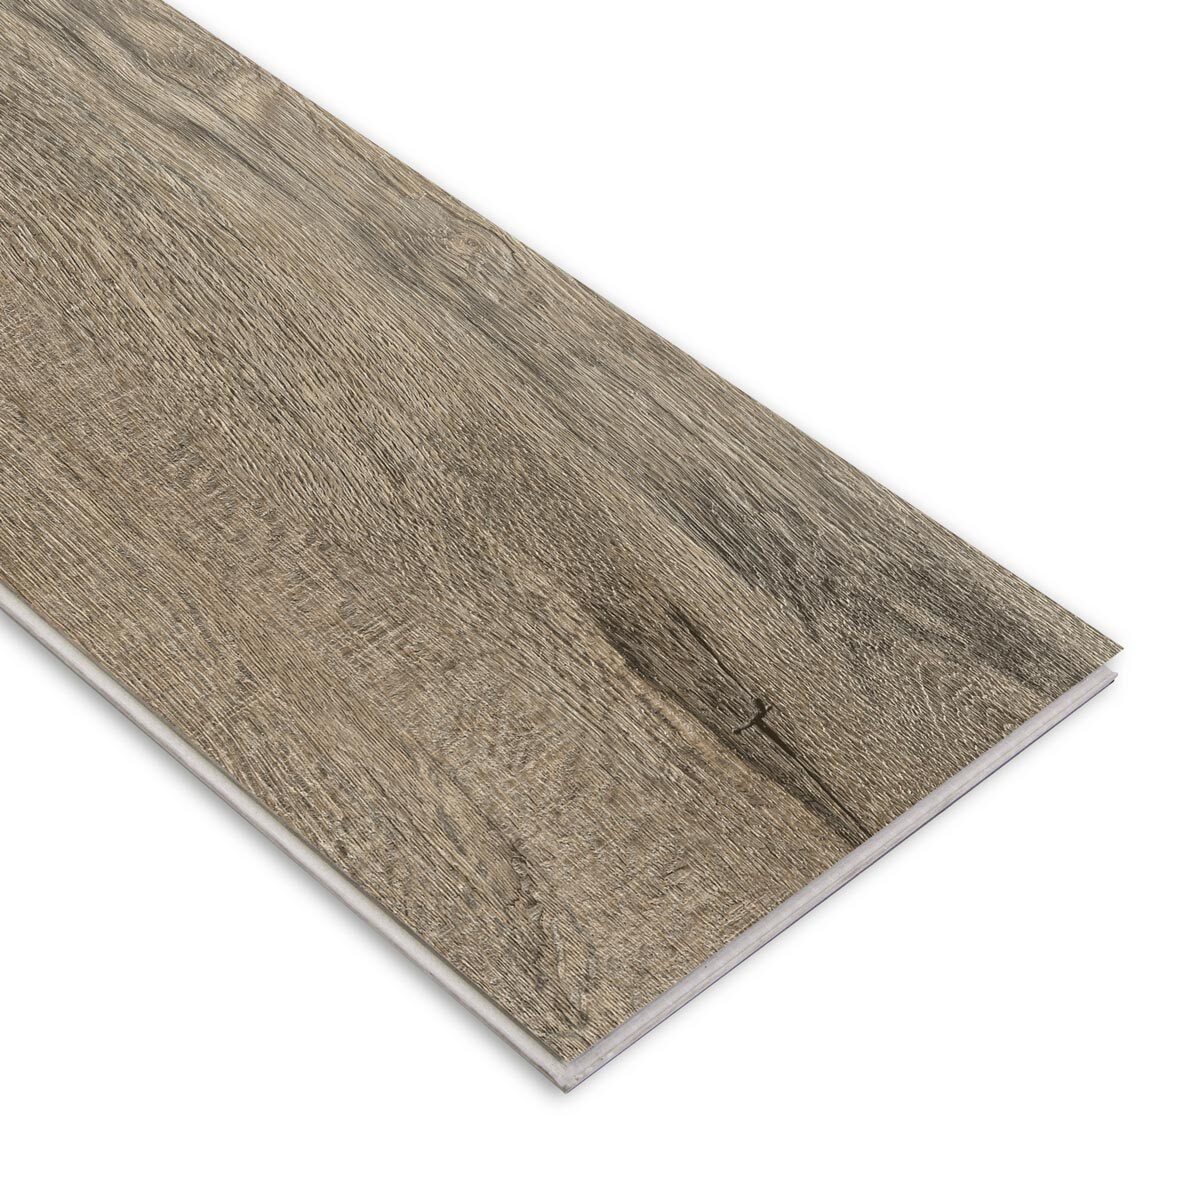 Close up image of flooring